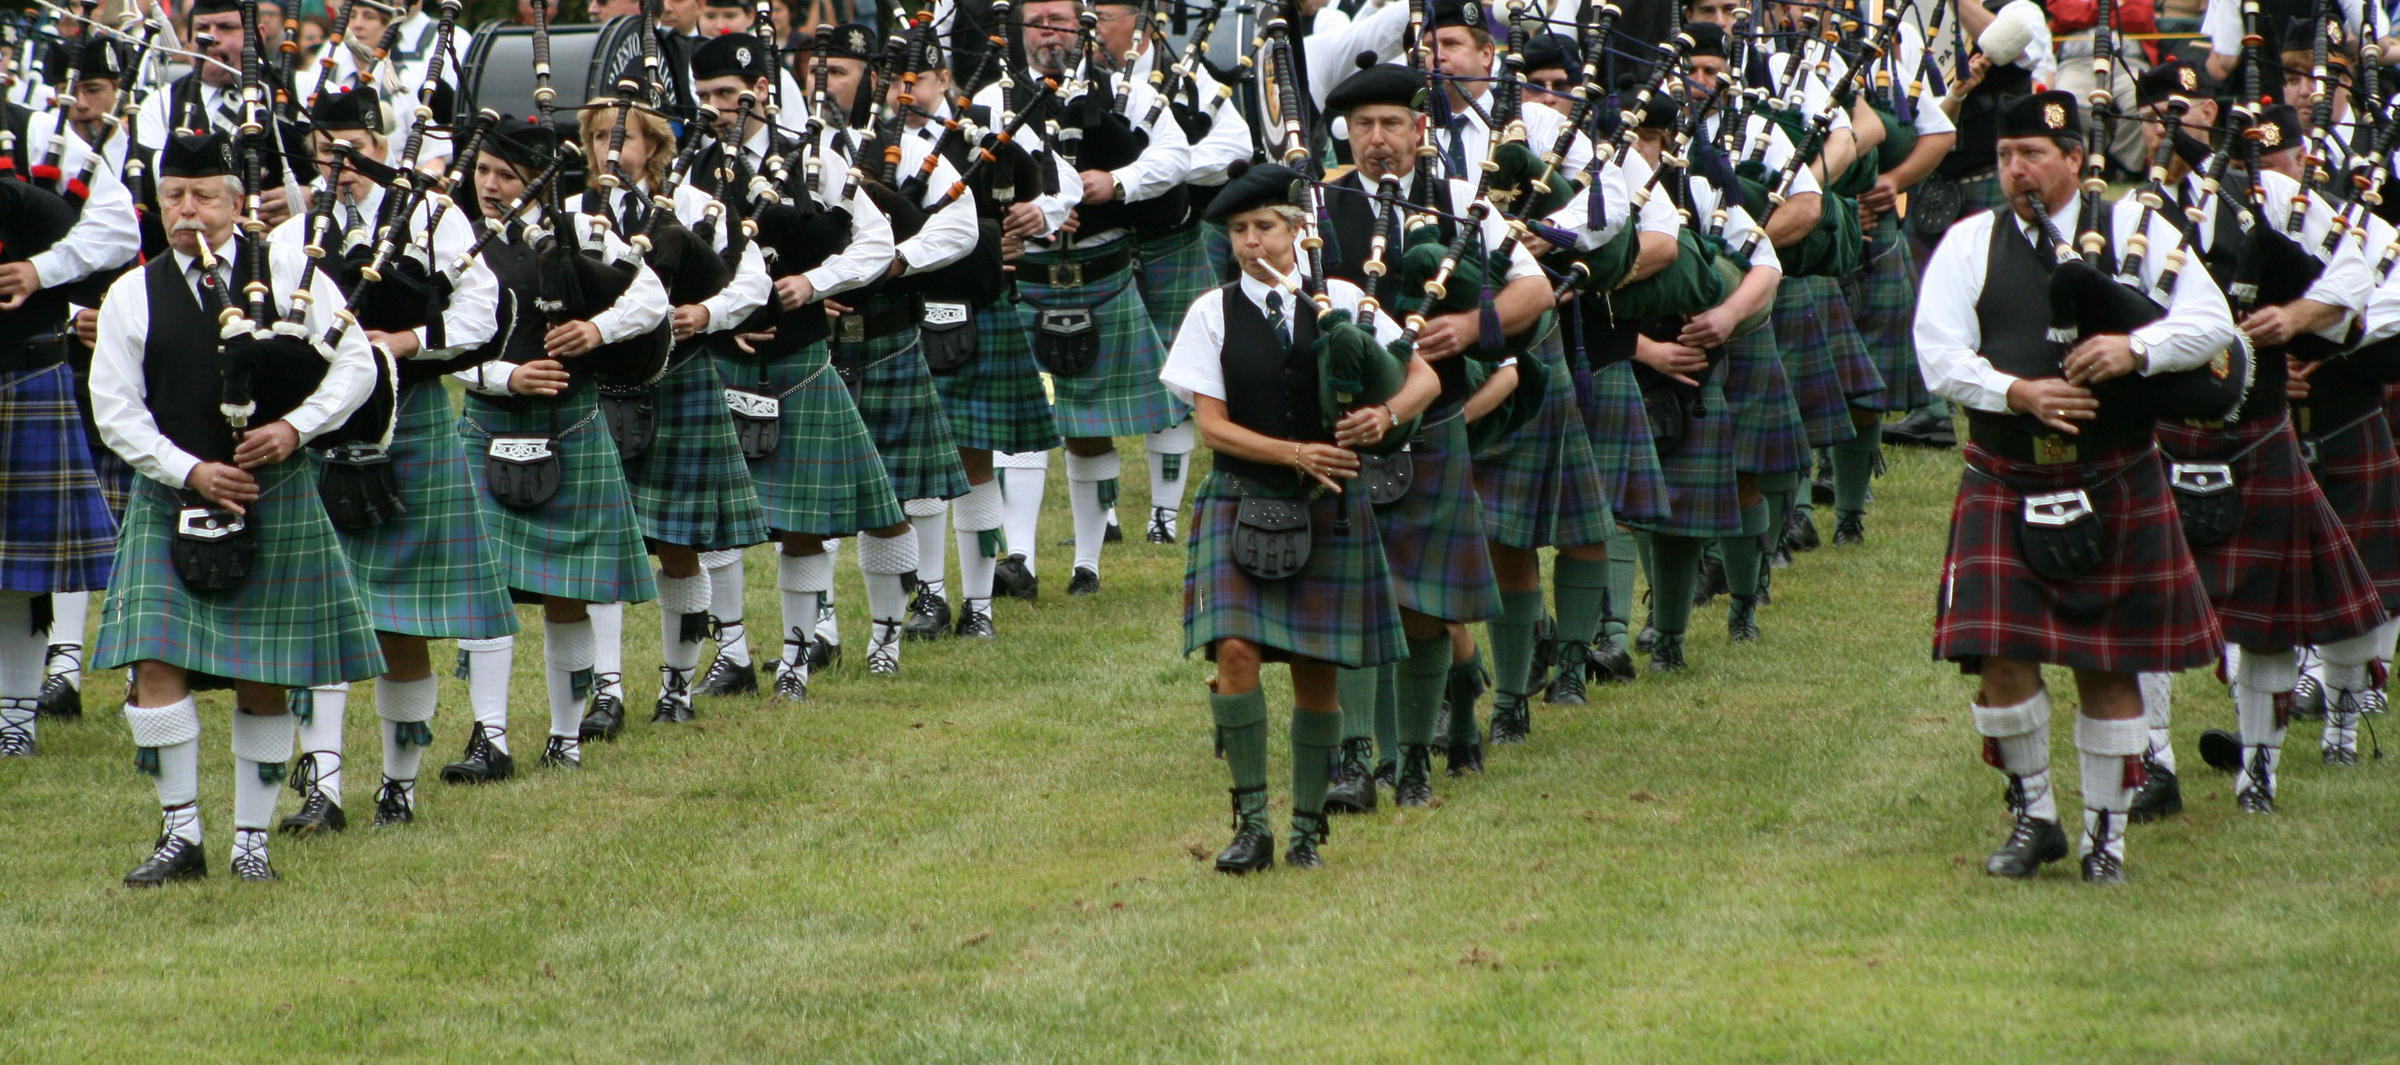 Scottish Highland Games Return to Ligonier | 90.5 WESA